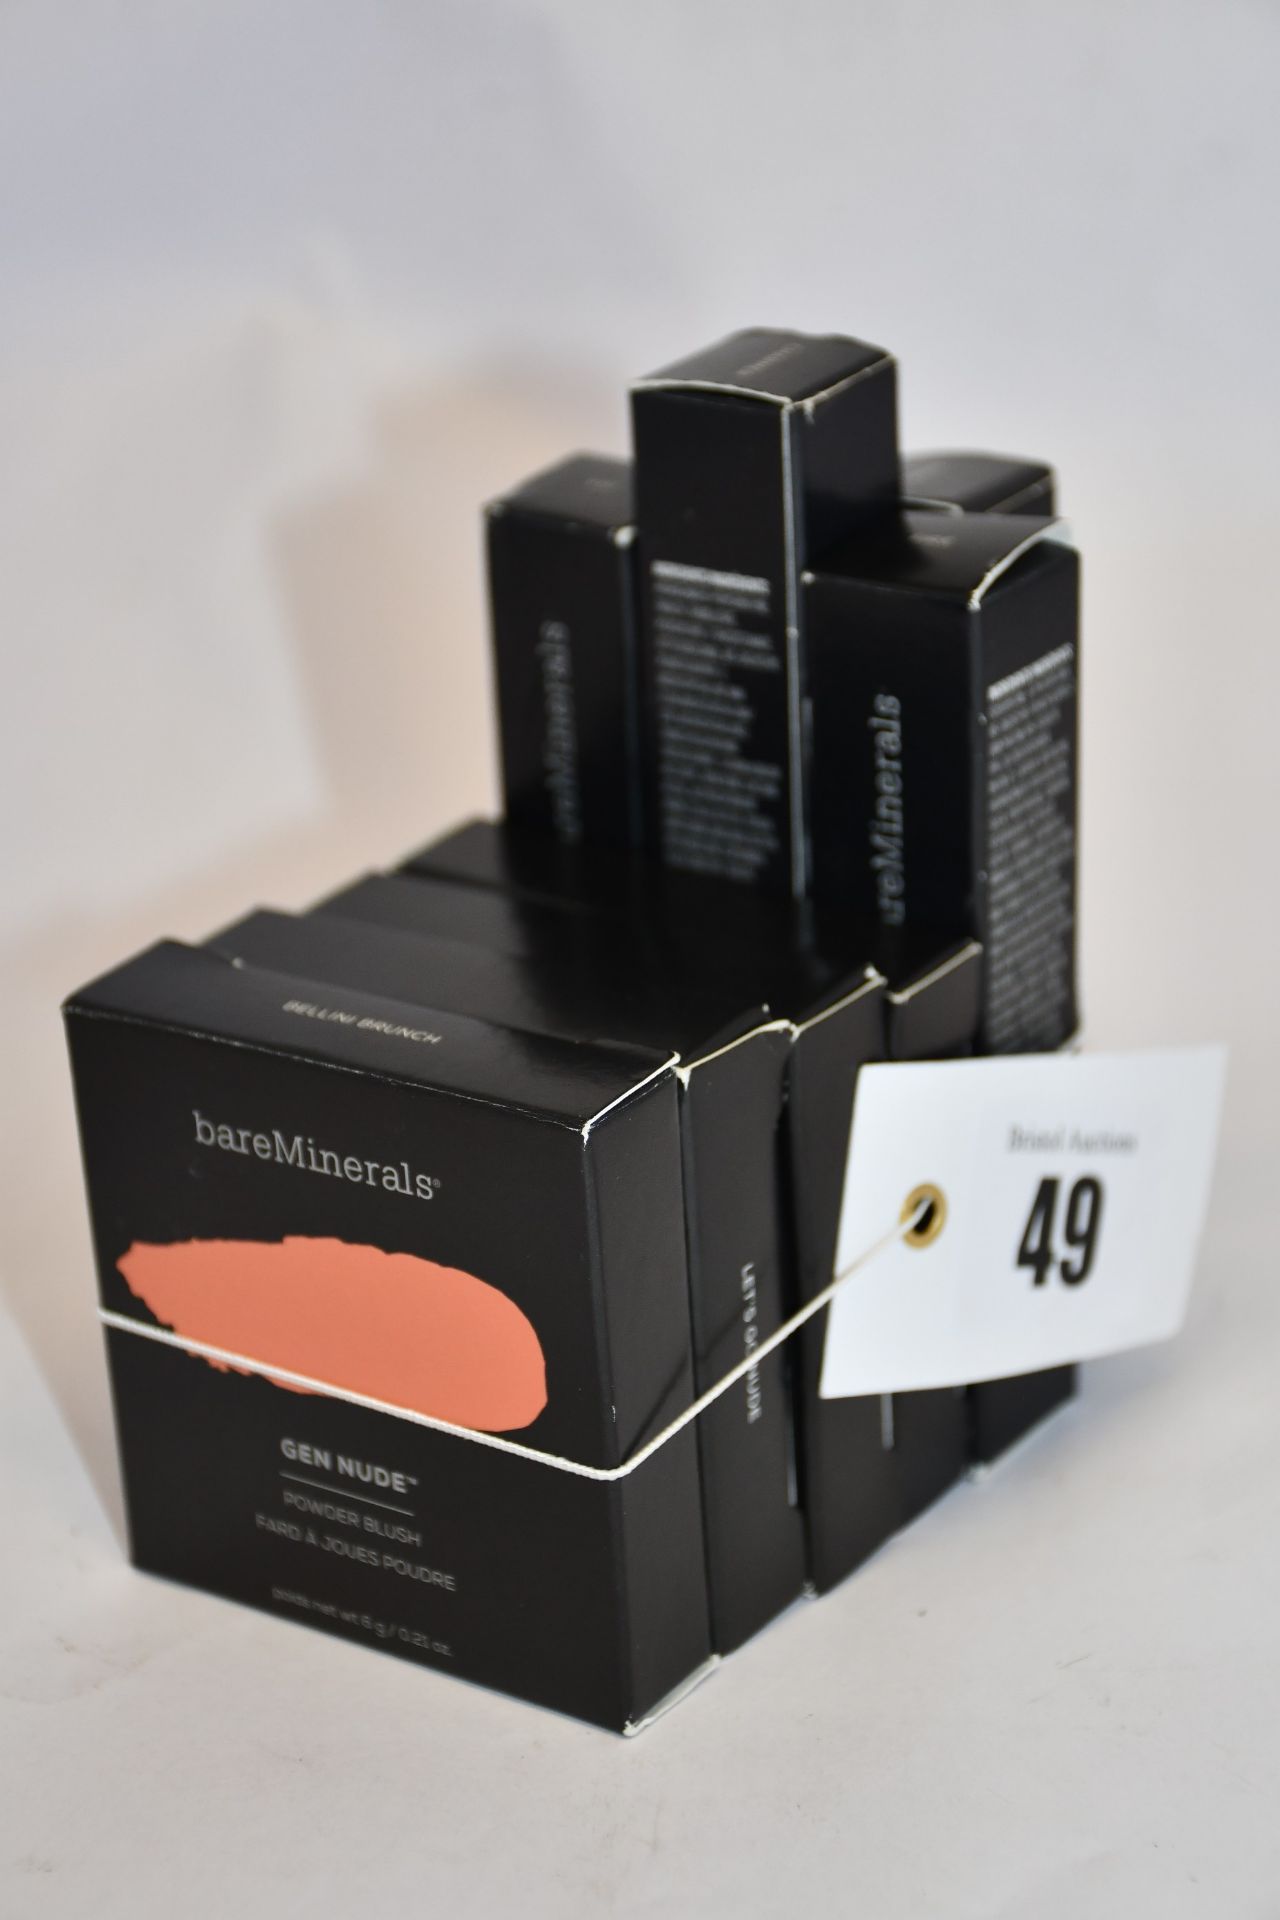 A quantity of Bare Minerals cosmetic products to include Gen Nude powder blush, Matte liquid lip